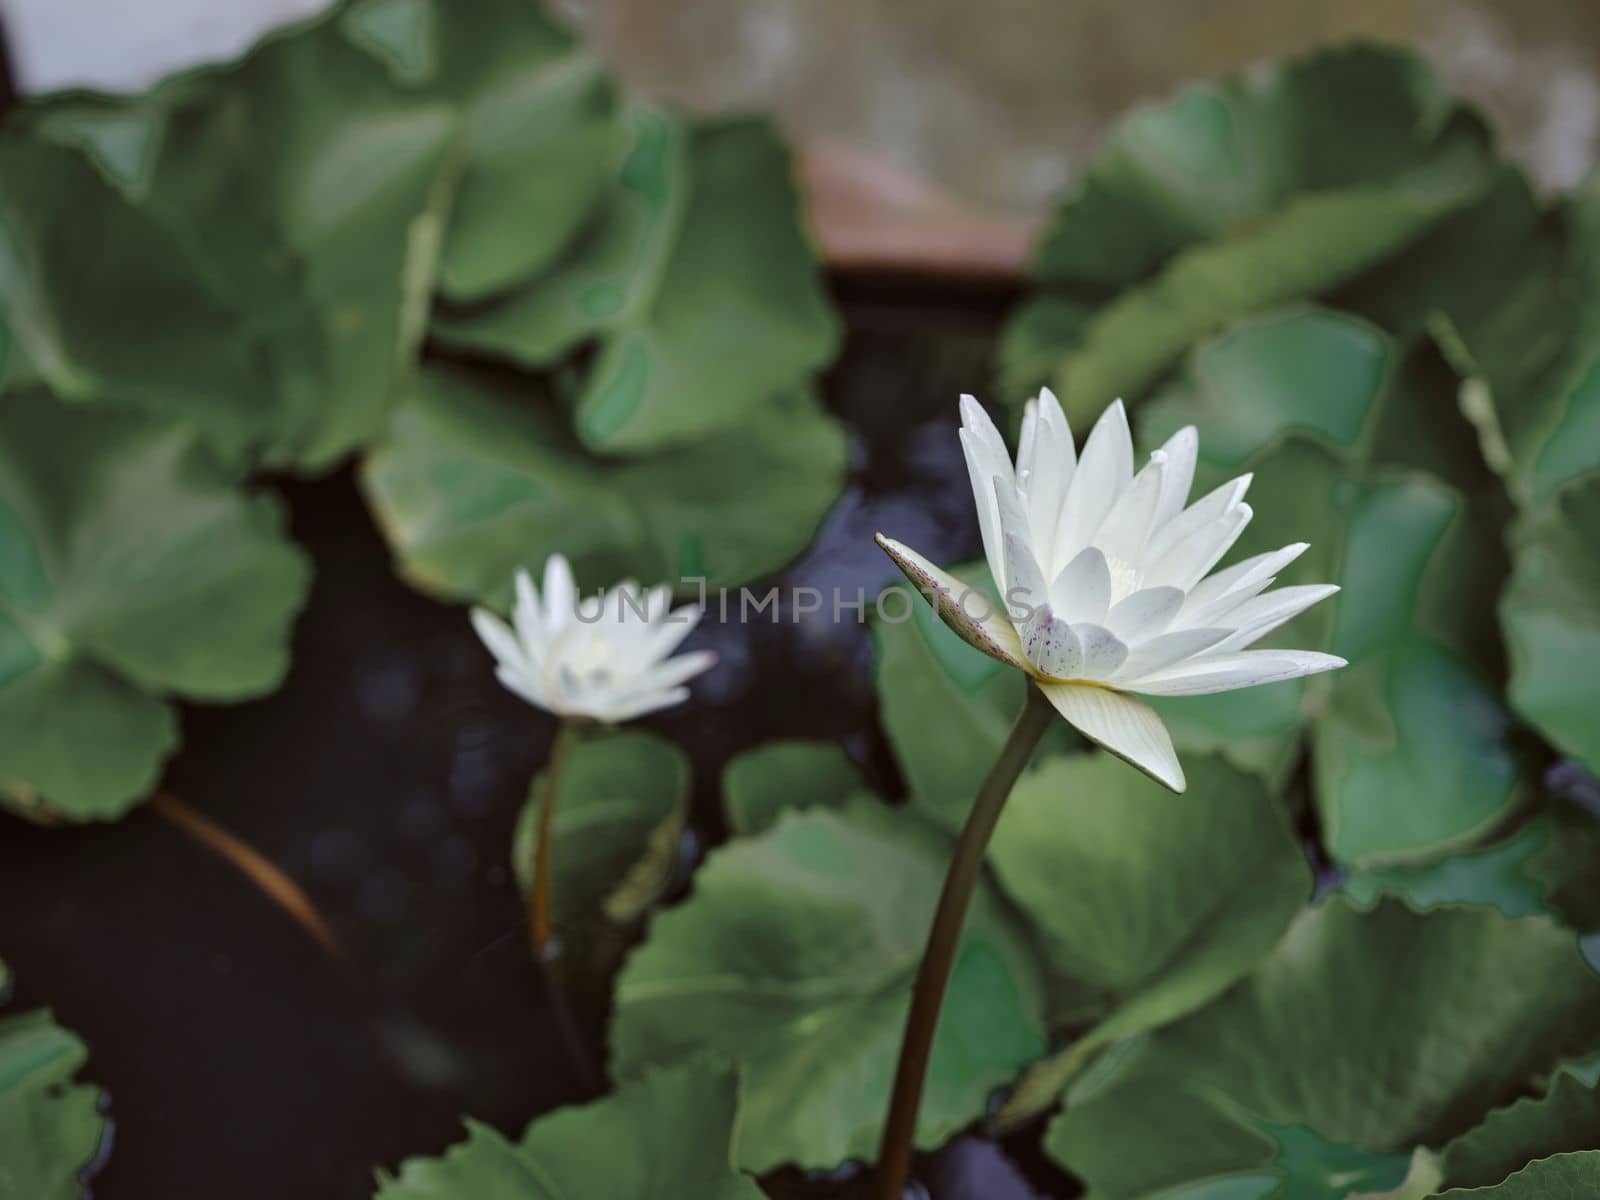 Lotus blooming white flowers in the pond by Hepjam